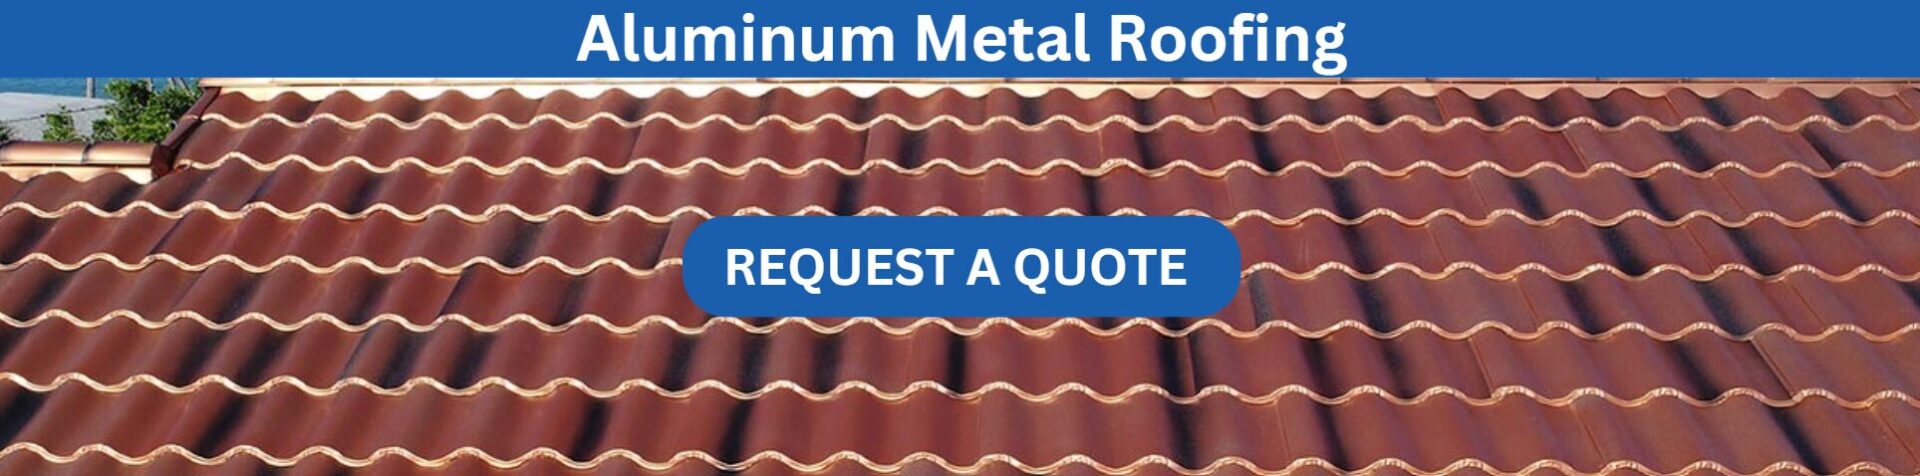 aluminum metal roofing